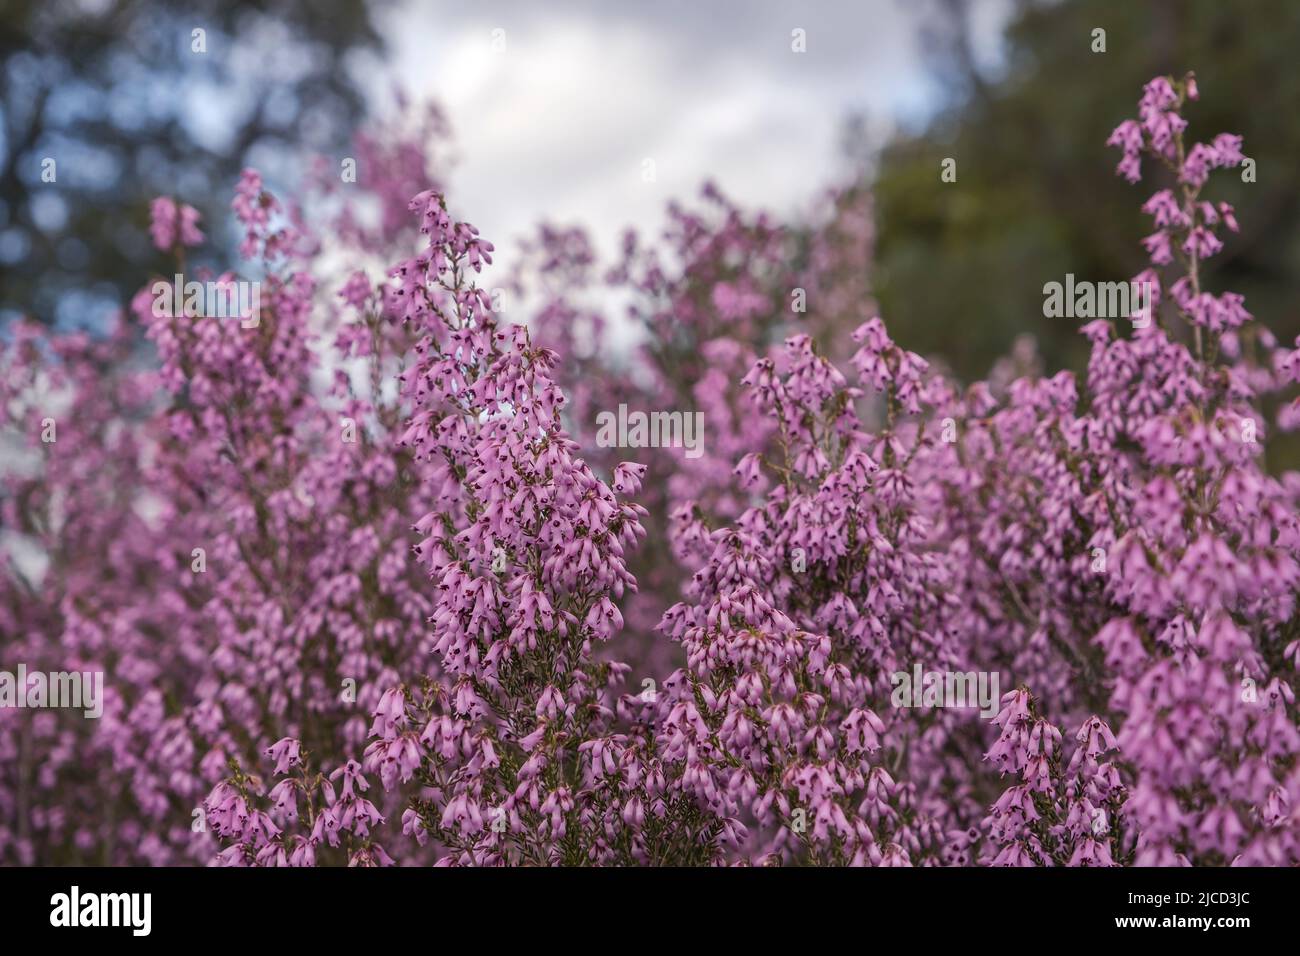 Spanish heath (Erica australis) pink flowers Stock Photo